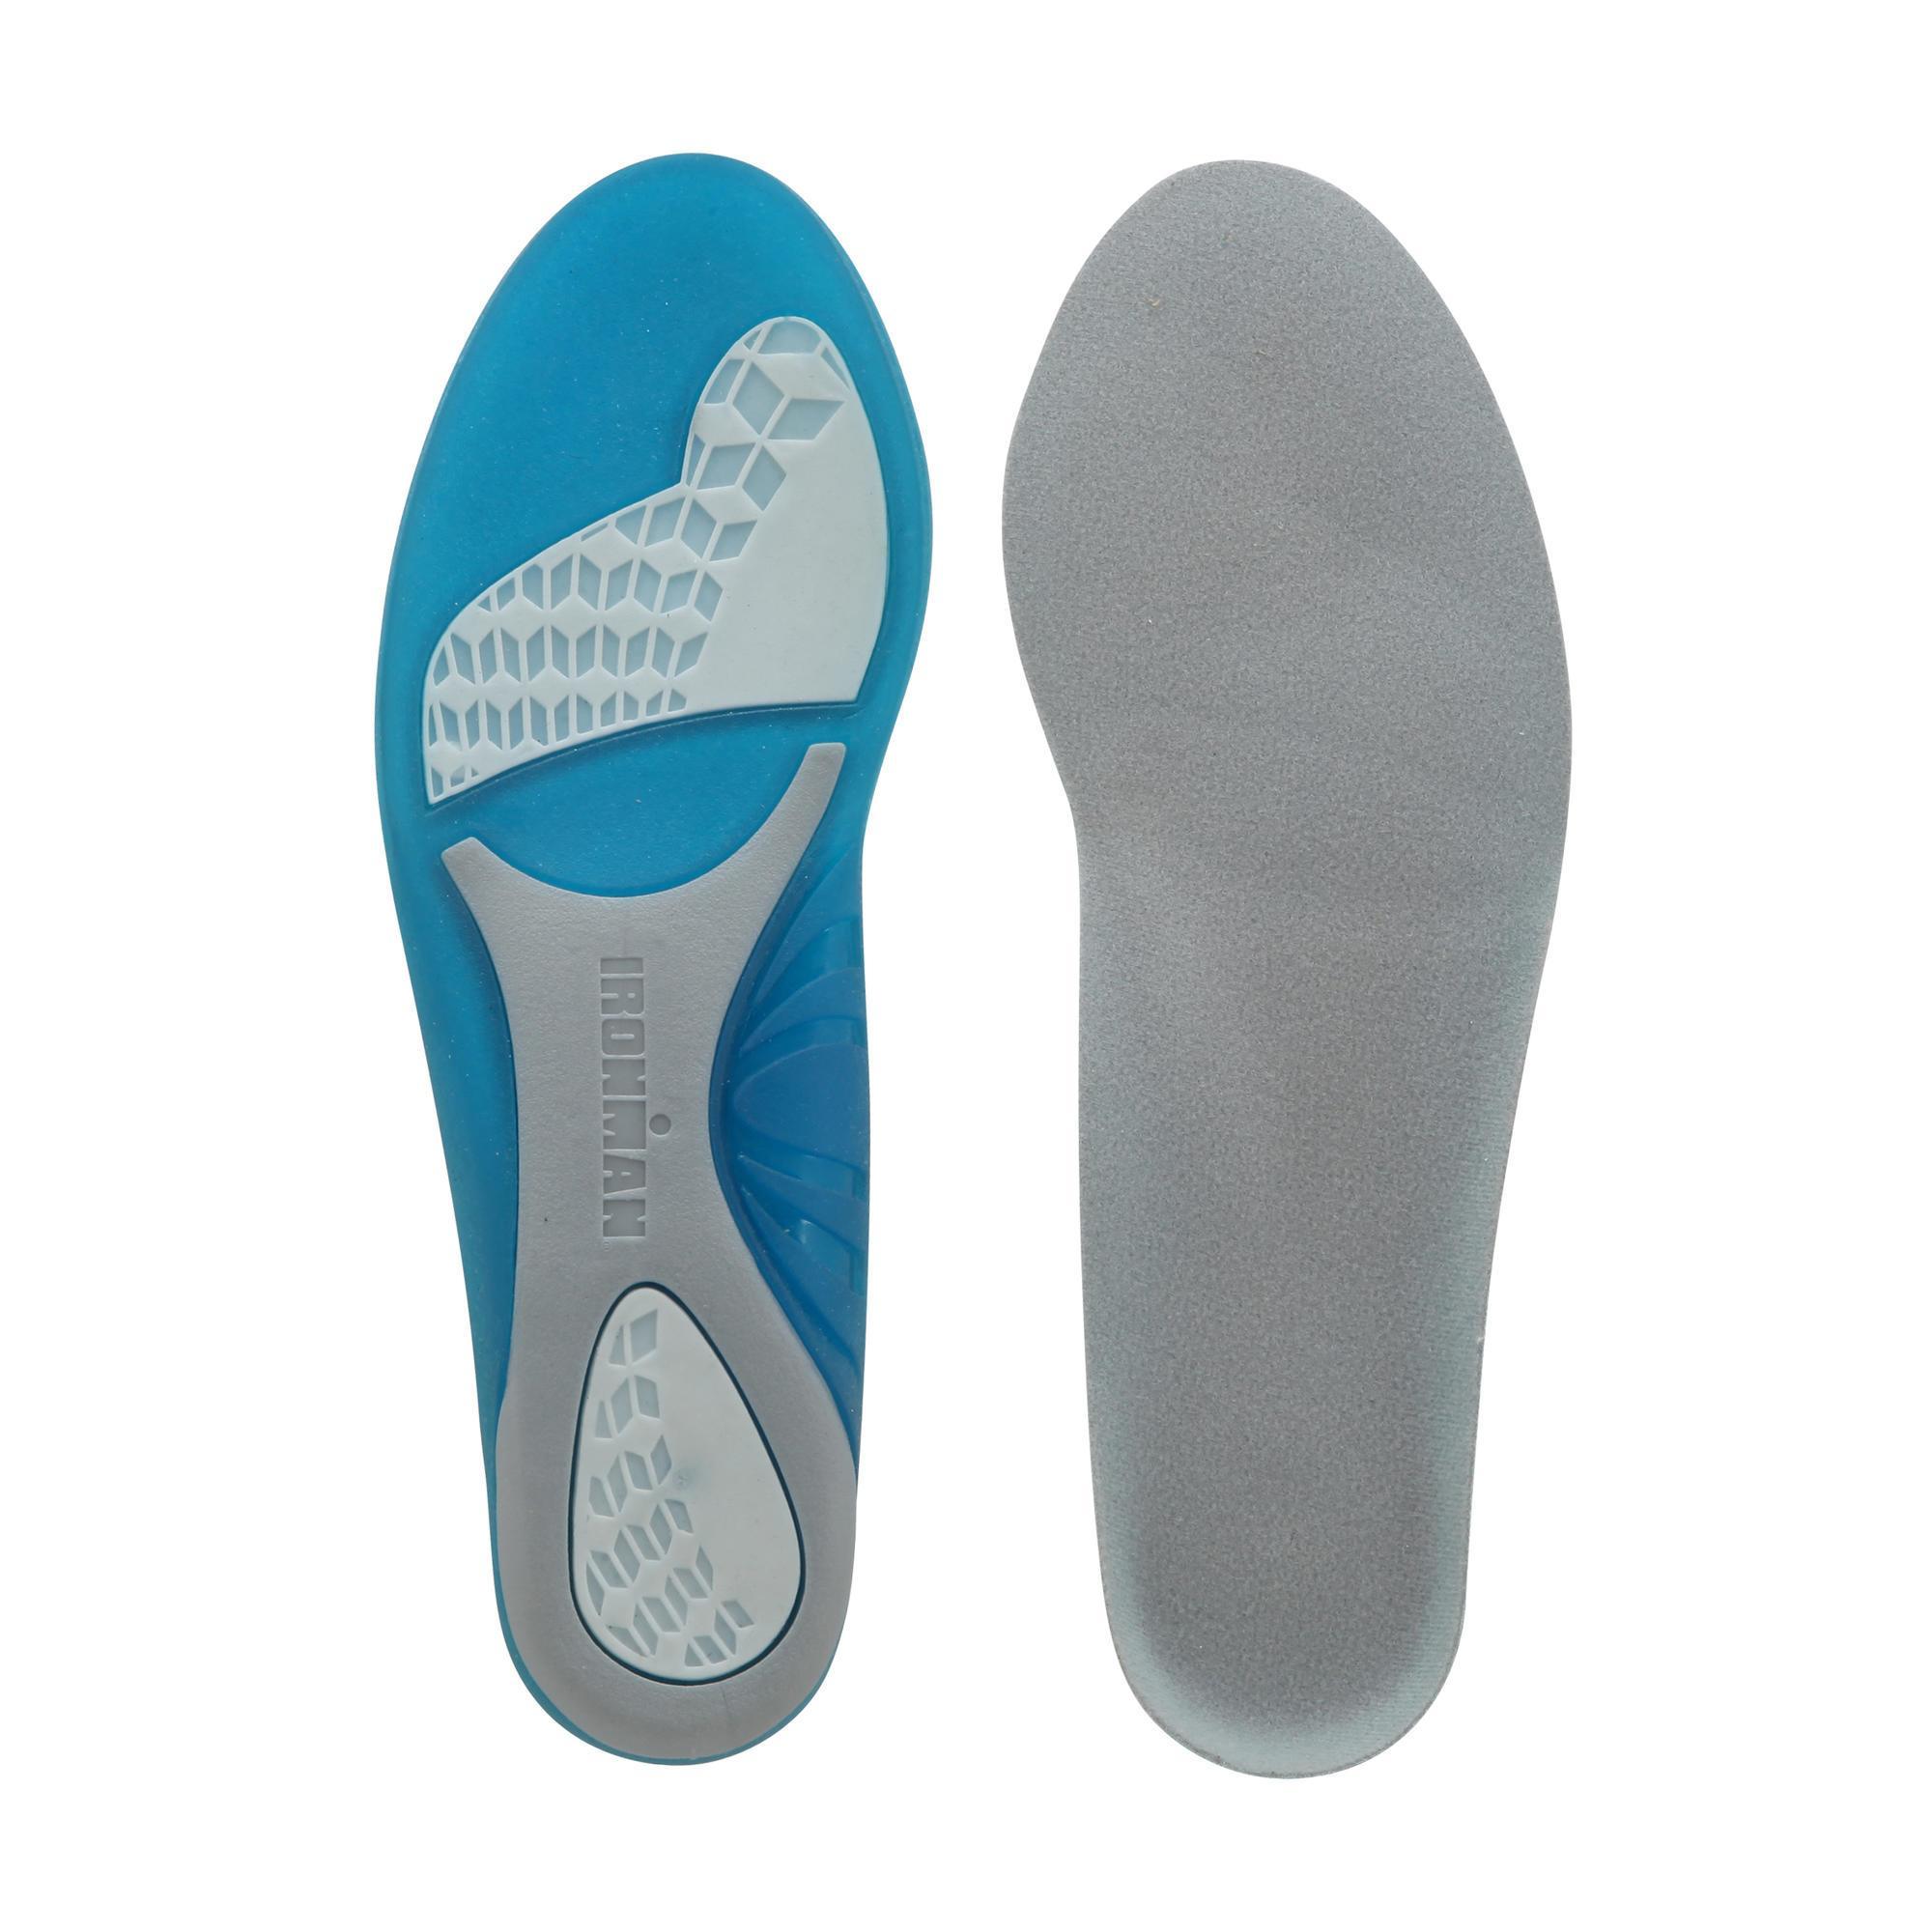 decathlon shoe sole